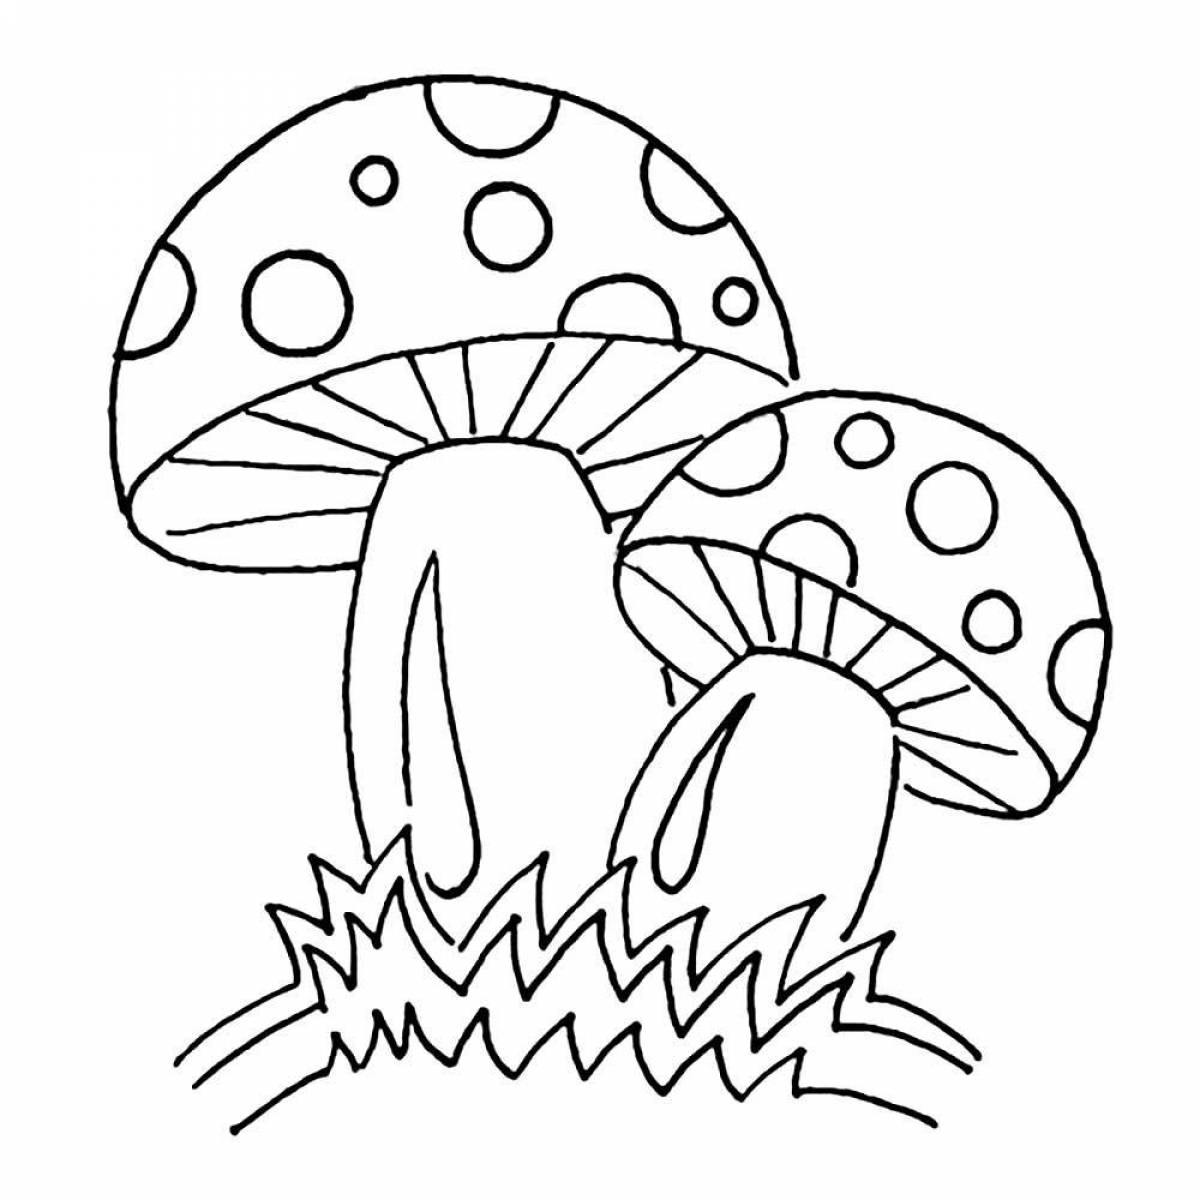 Fairy mushrooms coloring book for kids